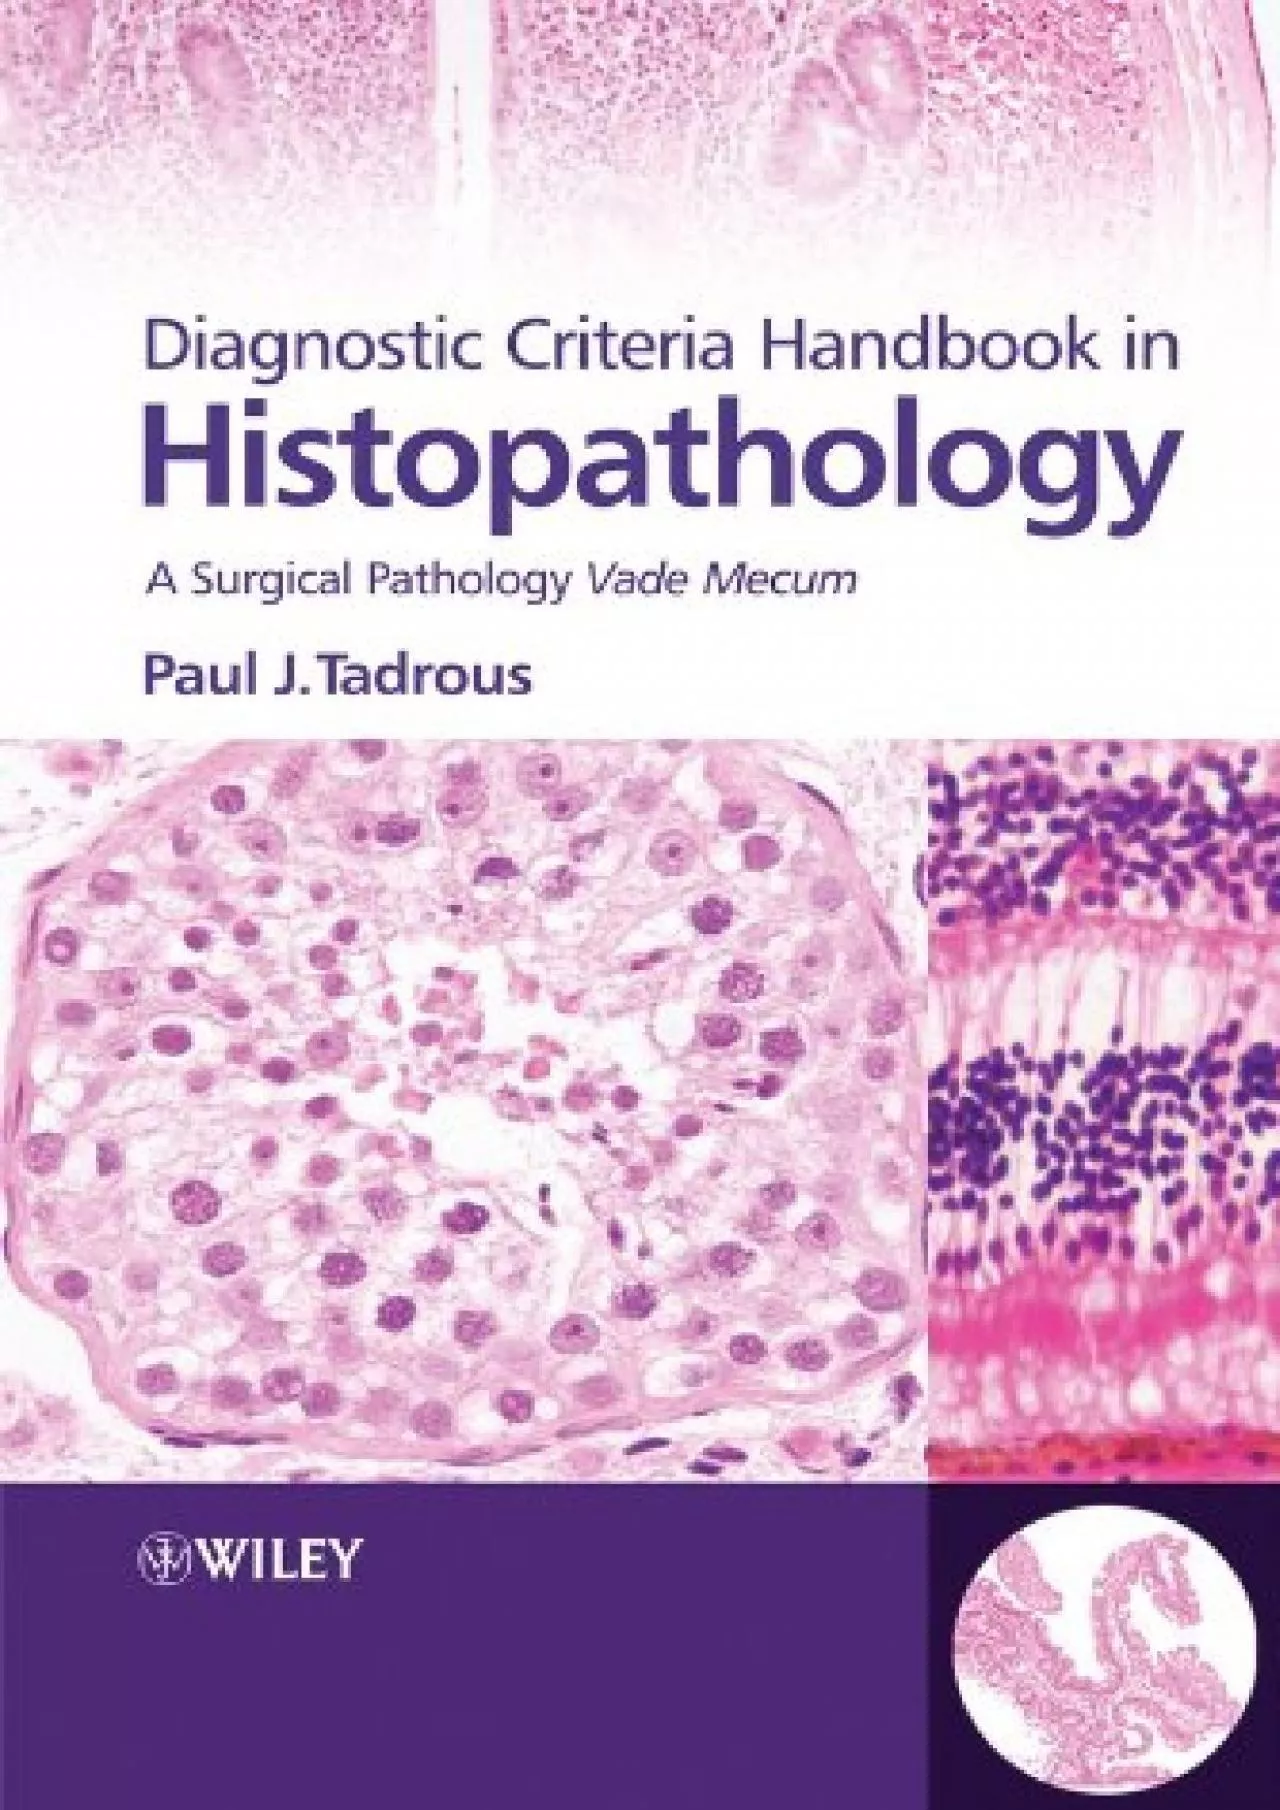 (EBOOK)-Diagnostic Criteria Handbook in Histopathology: A Surgical Pathology Vade Mecum